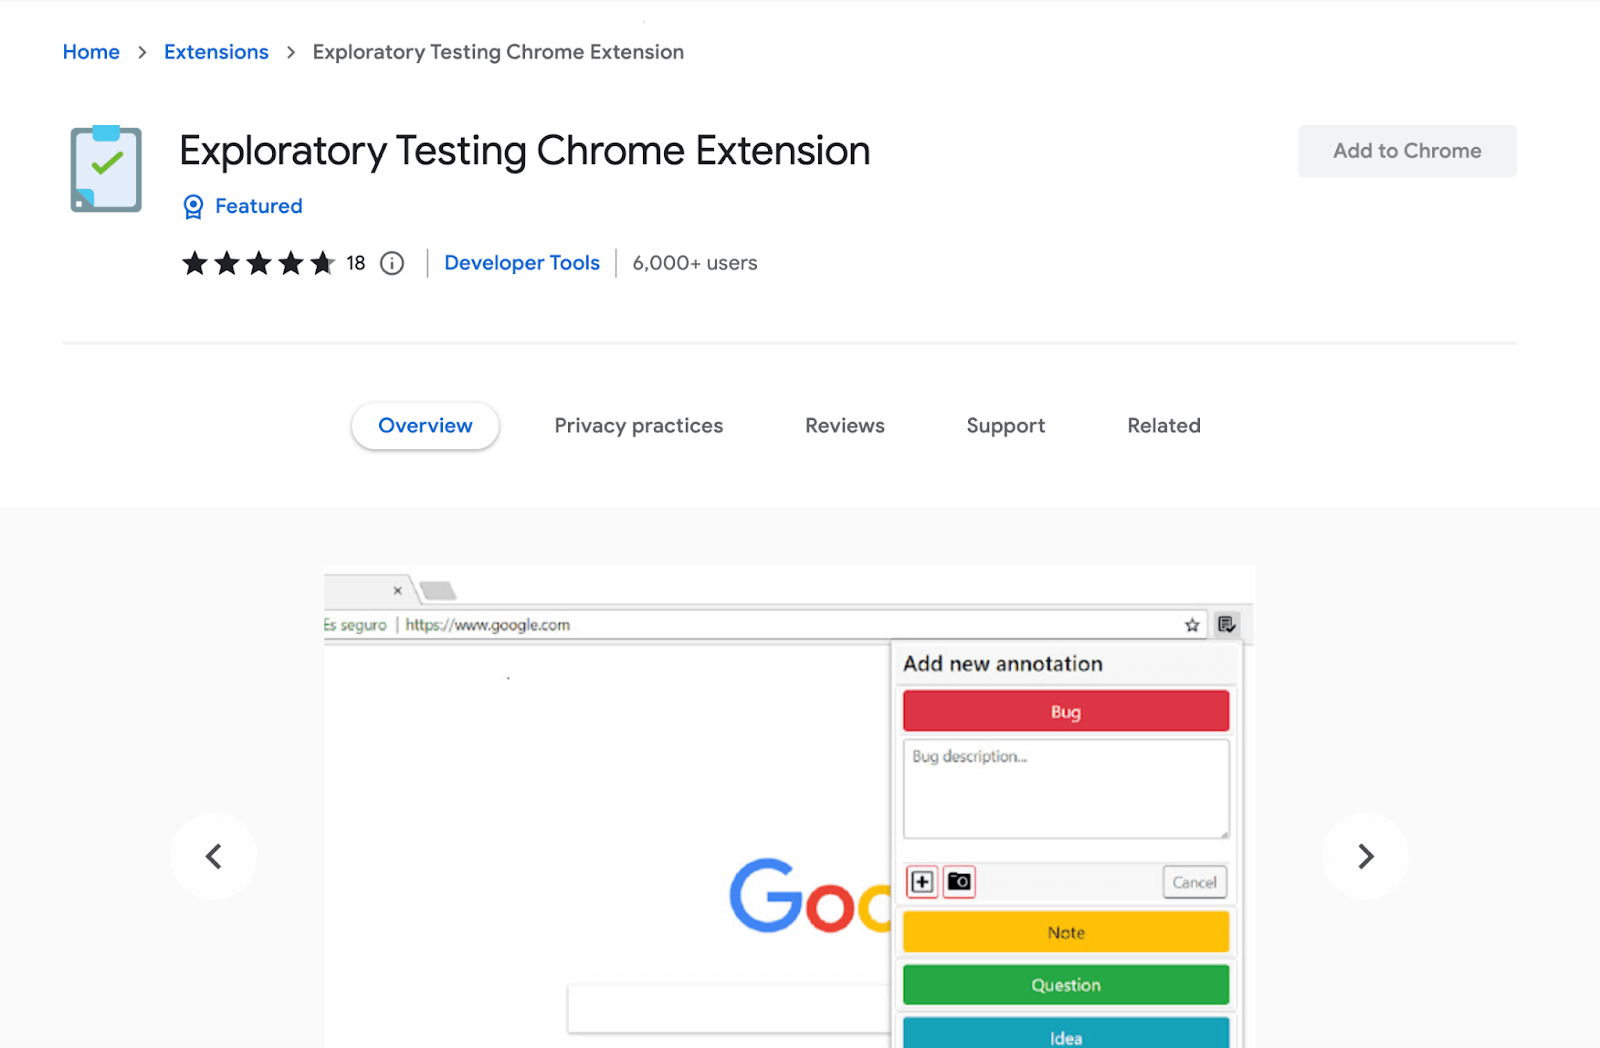 Exploratory Testing Chrome Extension